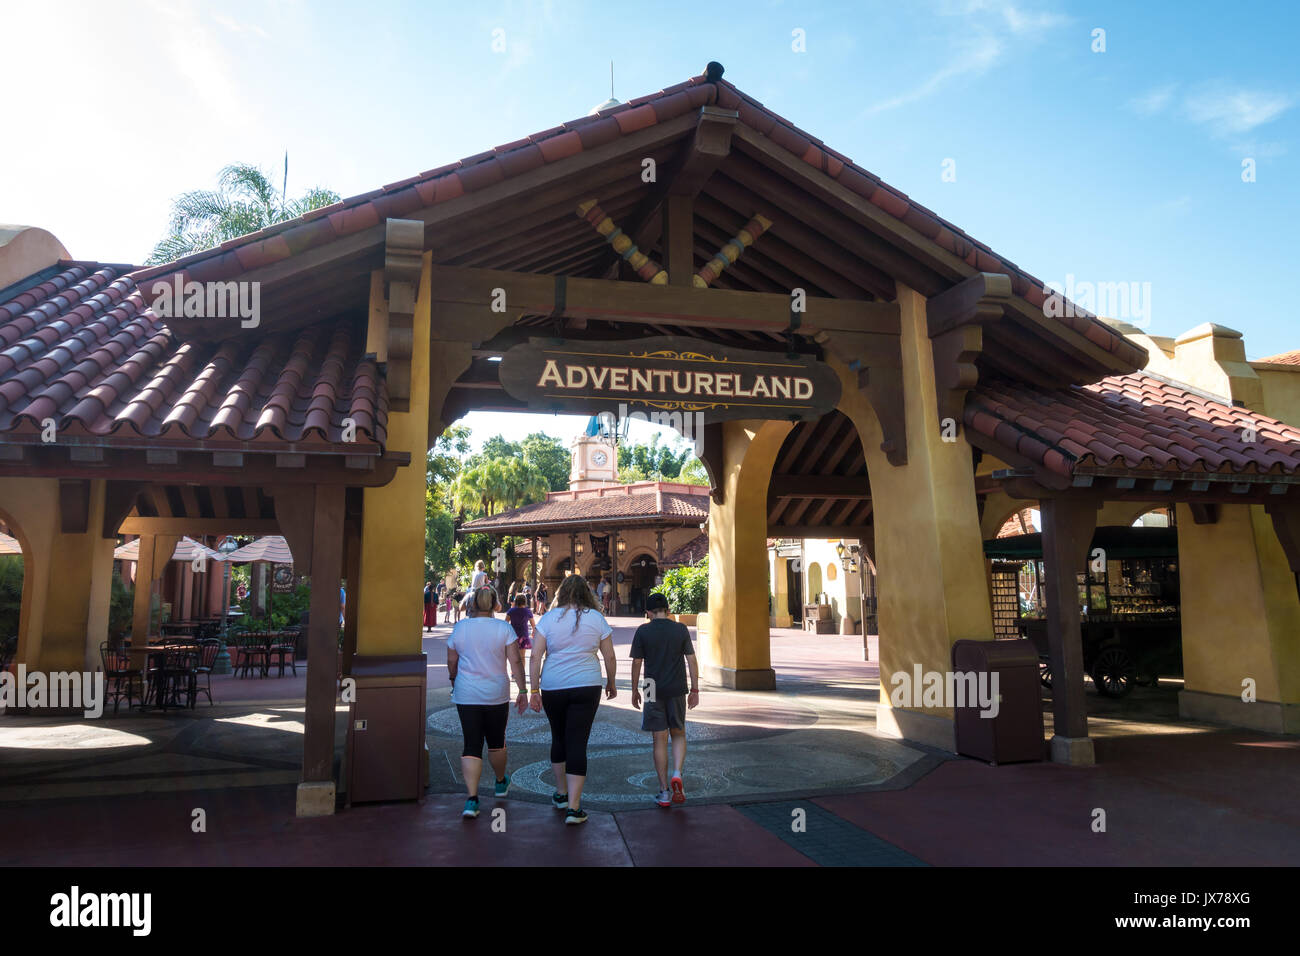 Entrance to Adventureland in Magic Kingdom theme park, Walt Disney World, Orlando, Florida. Stock Photo